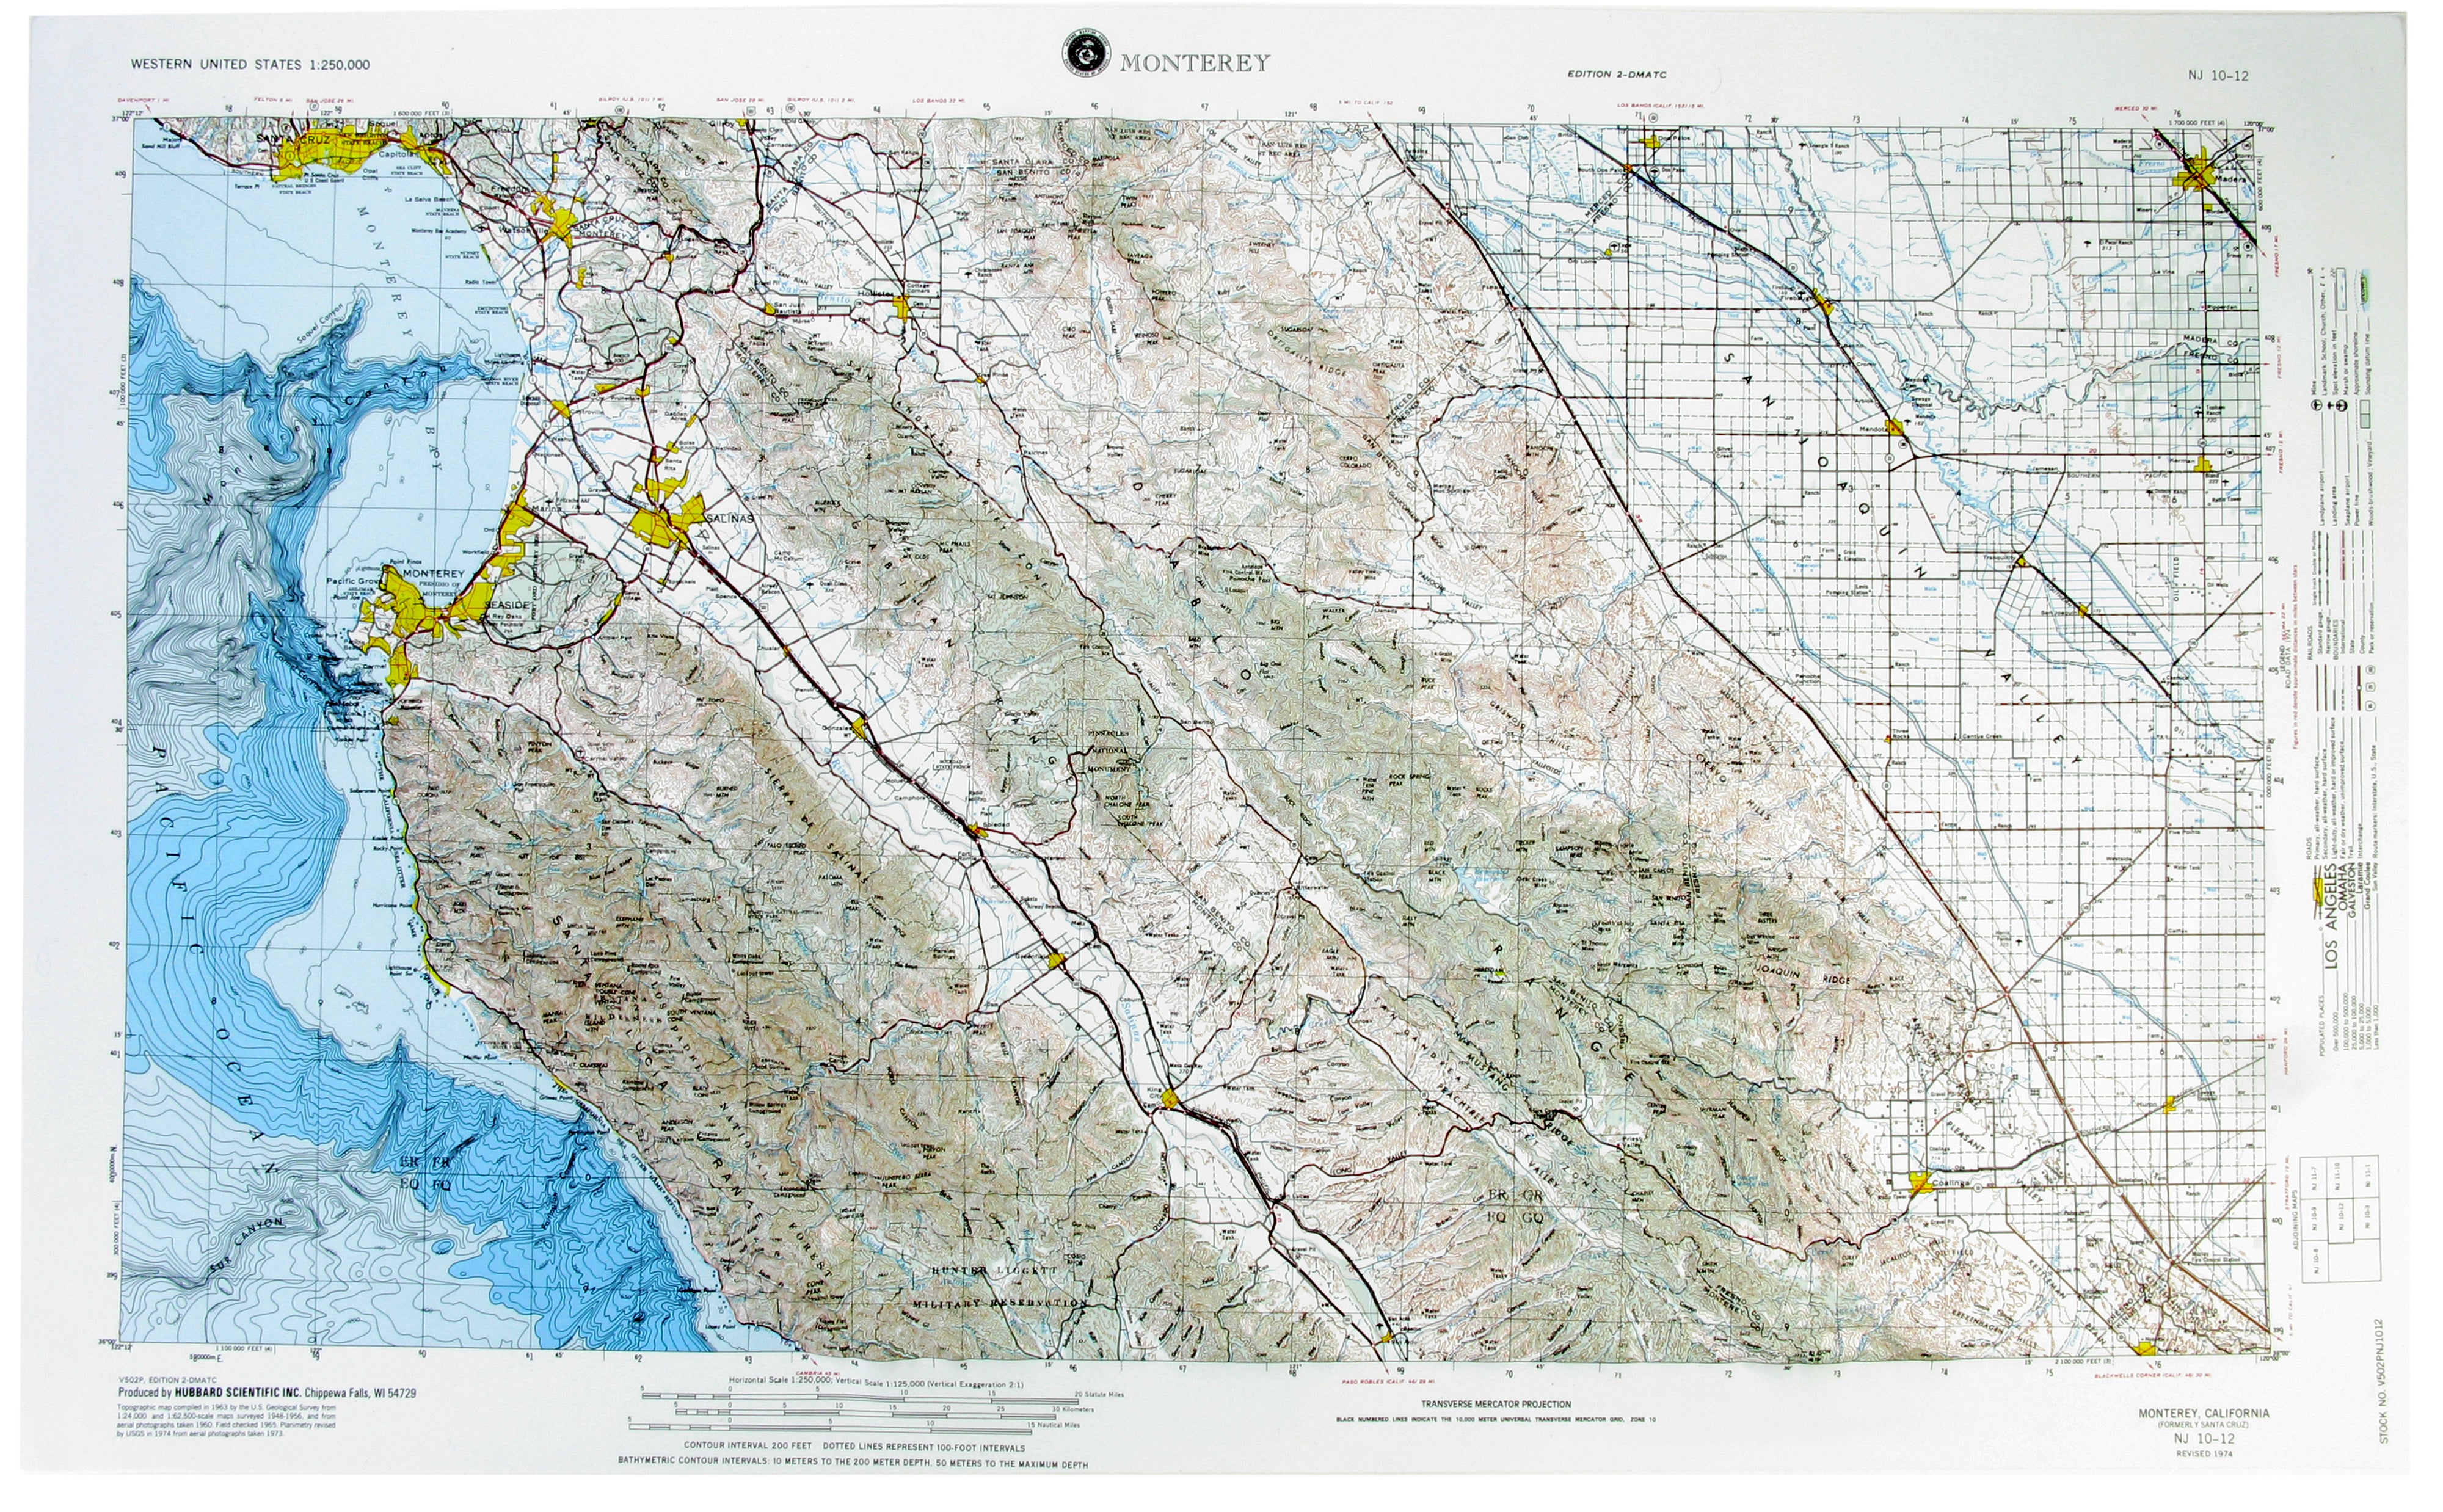 Monterey USGS Regional Three Dimensional Raised Relief Map